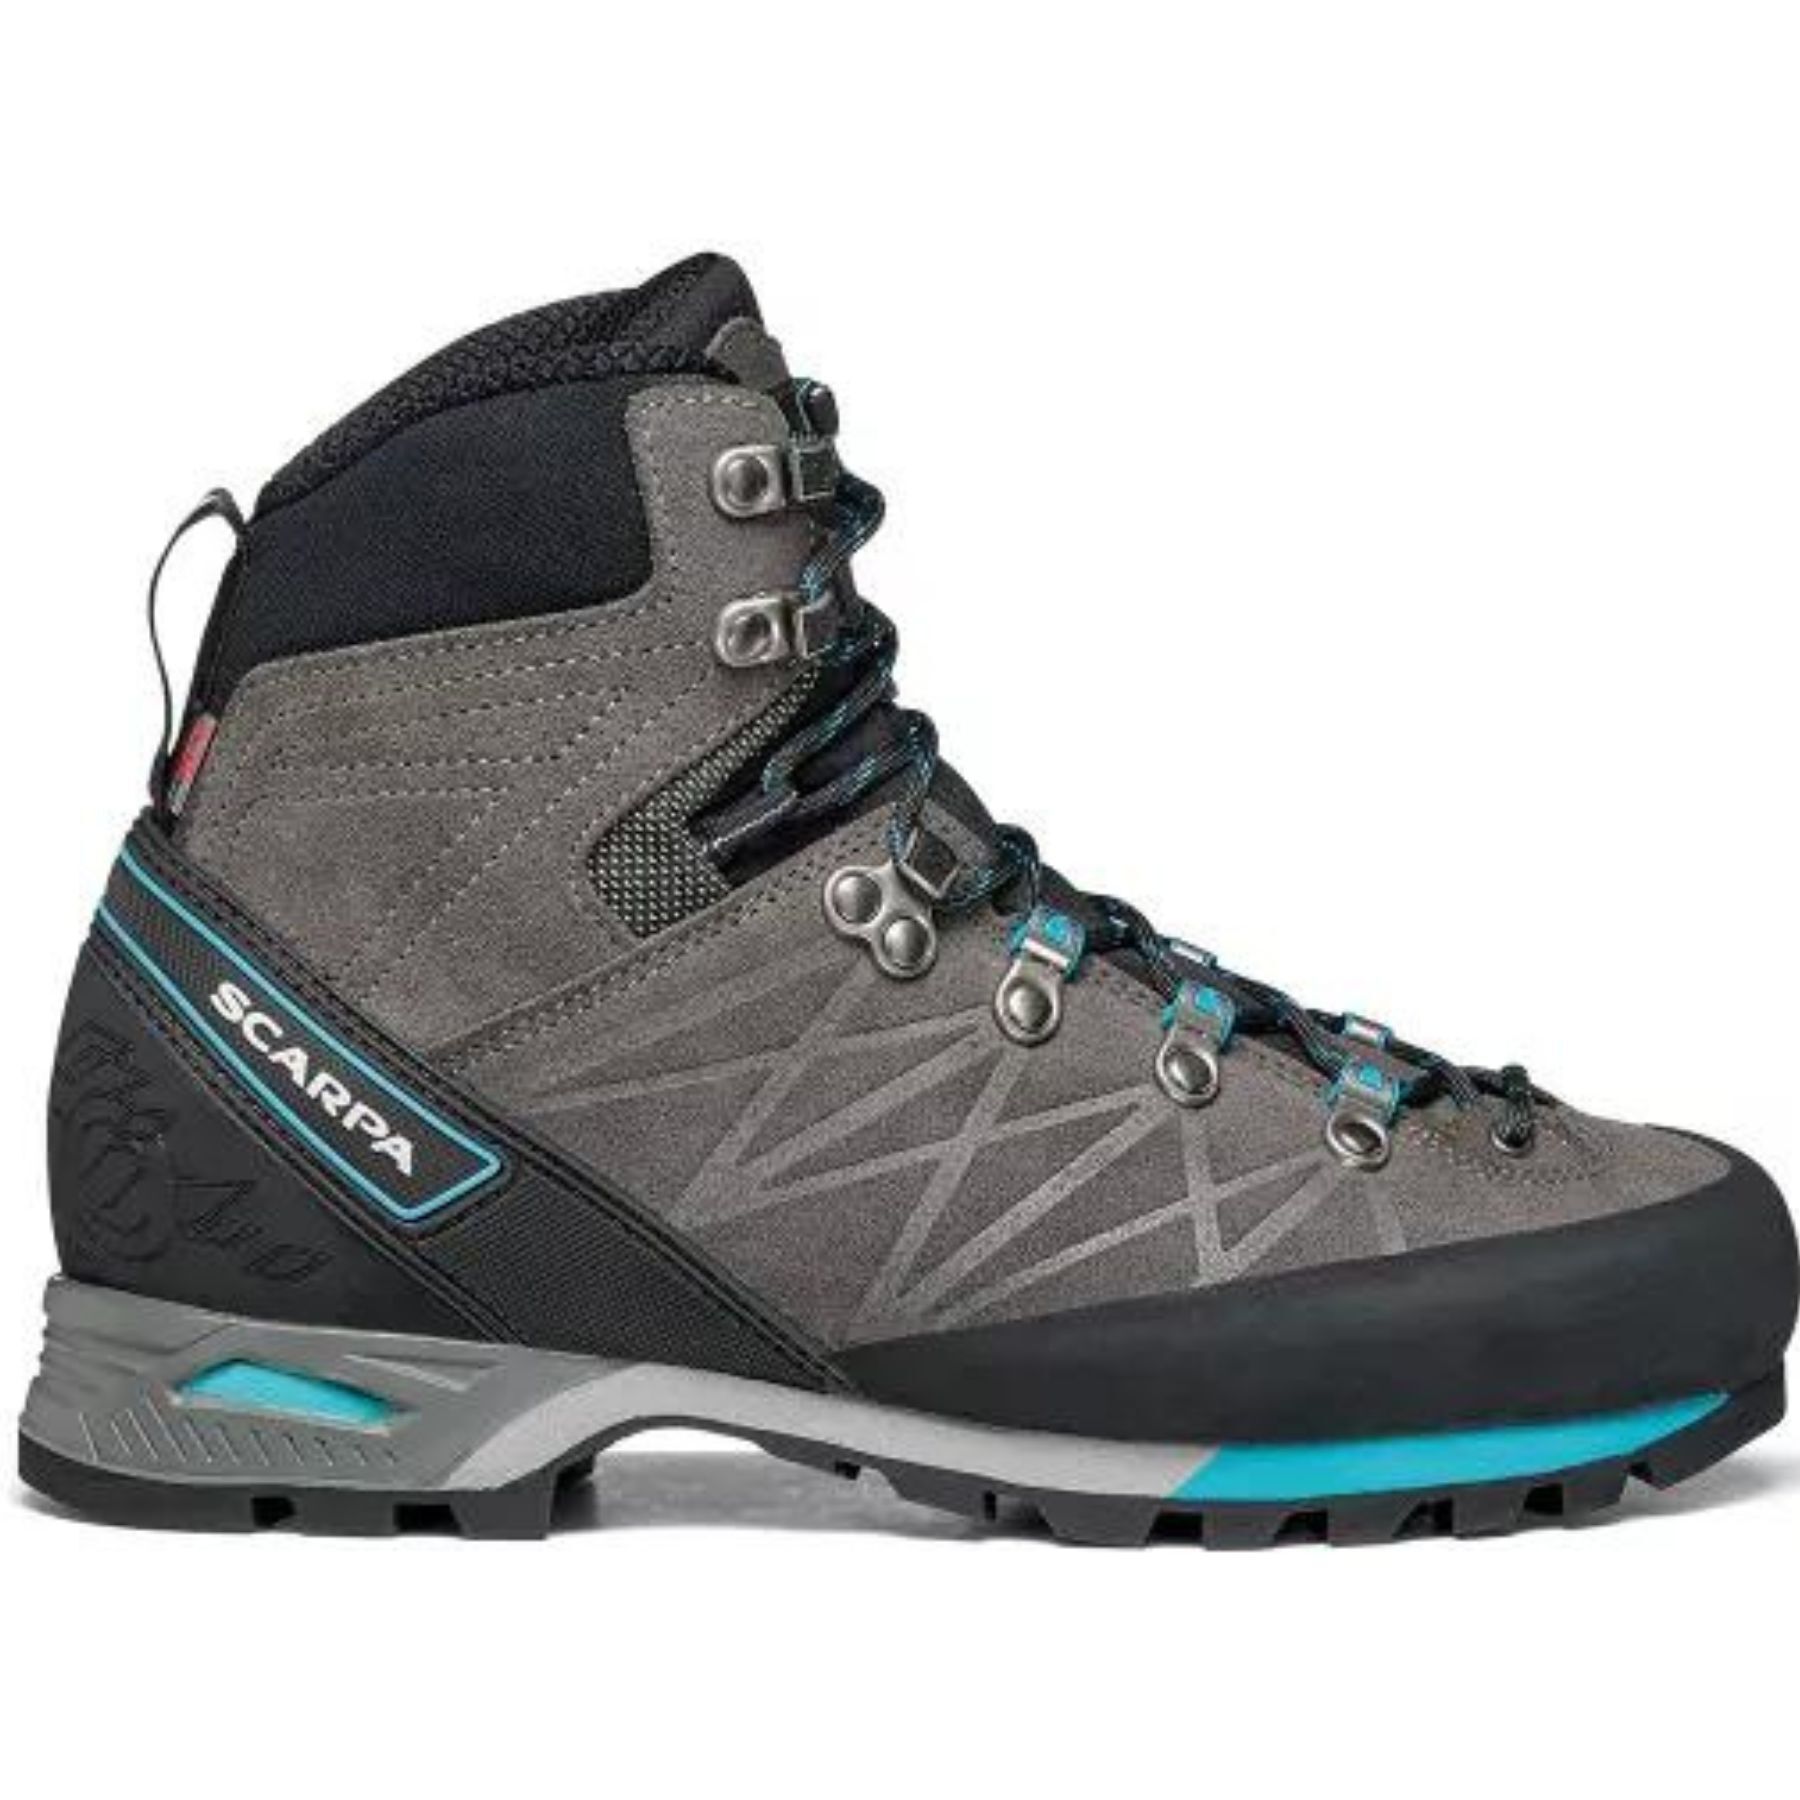 Scarpa Marmolada Pro HD - Trekking boots - Women's